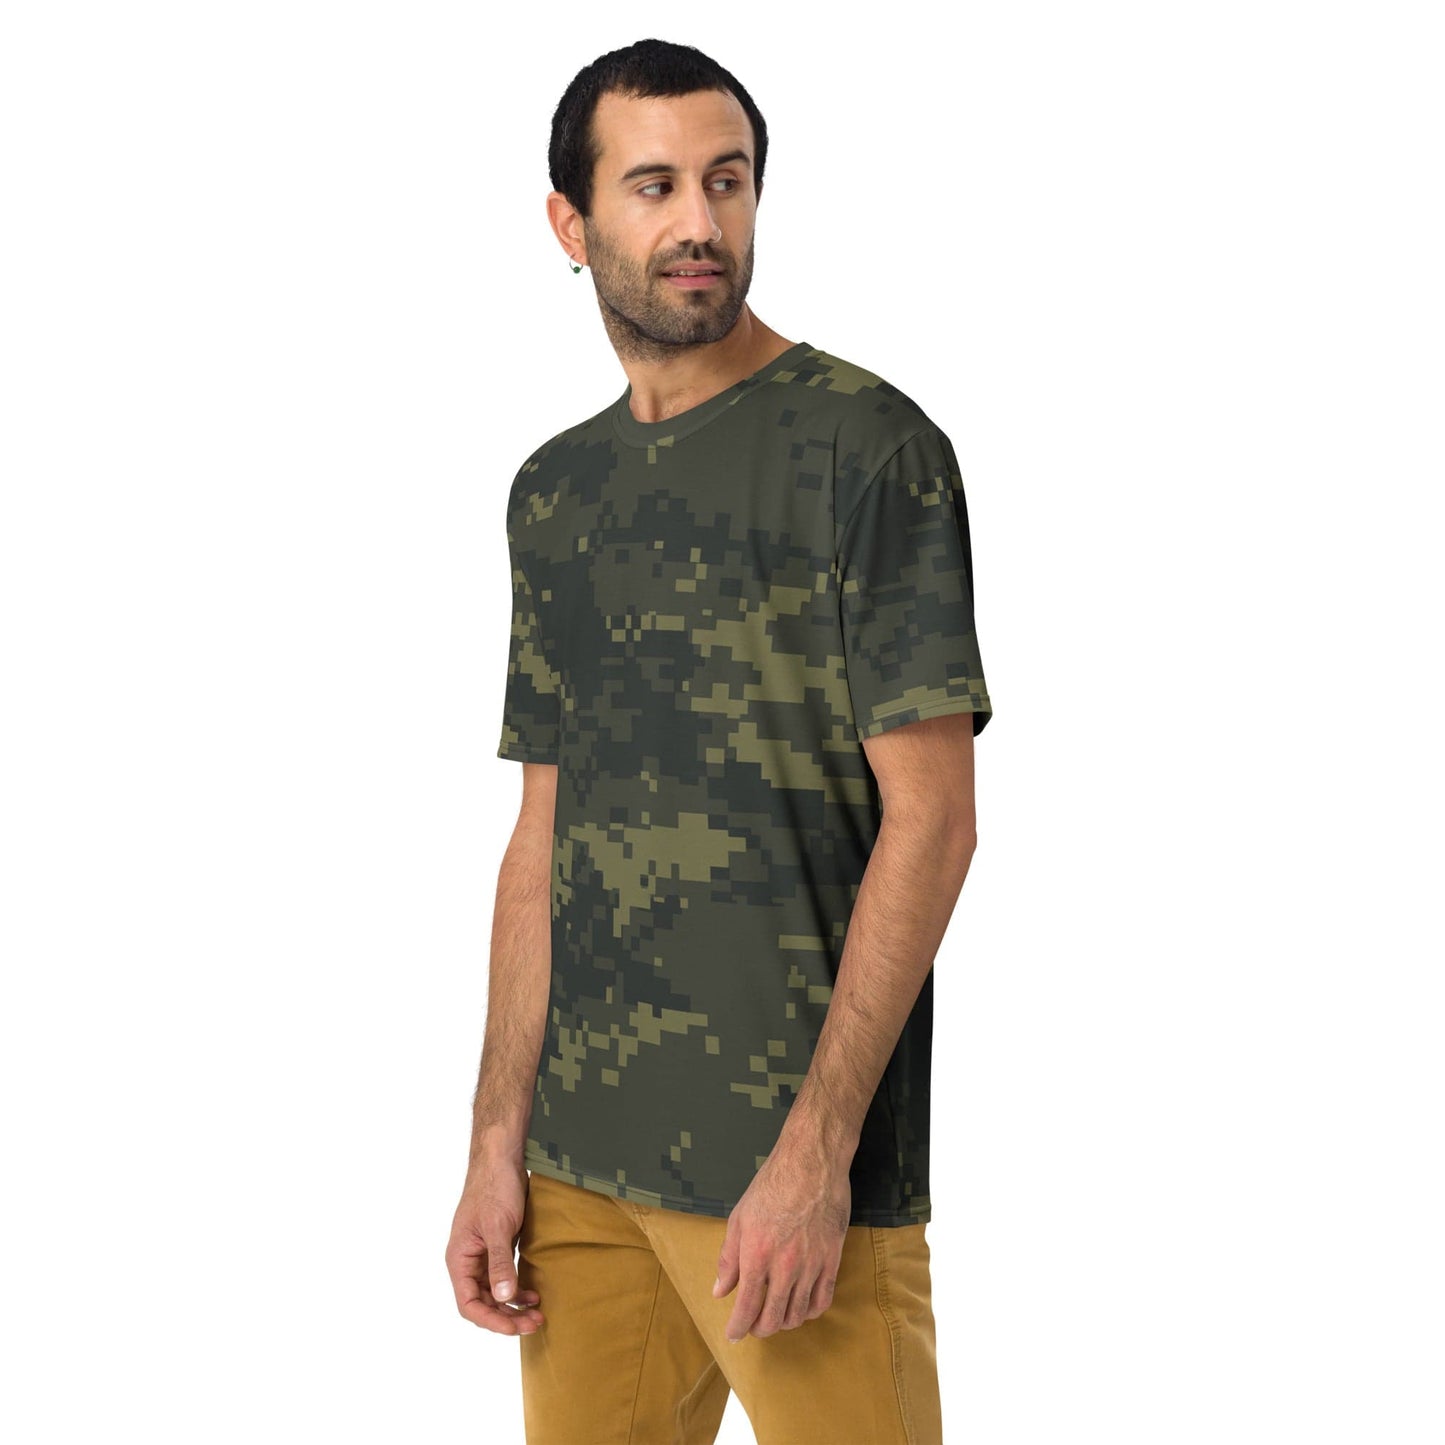 Digital Camo Men's T-shirt Army camouflage Shirt